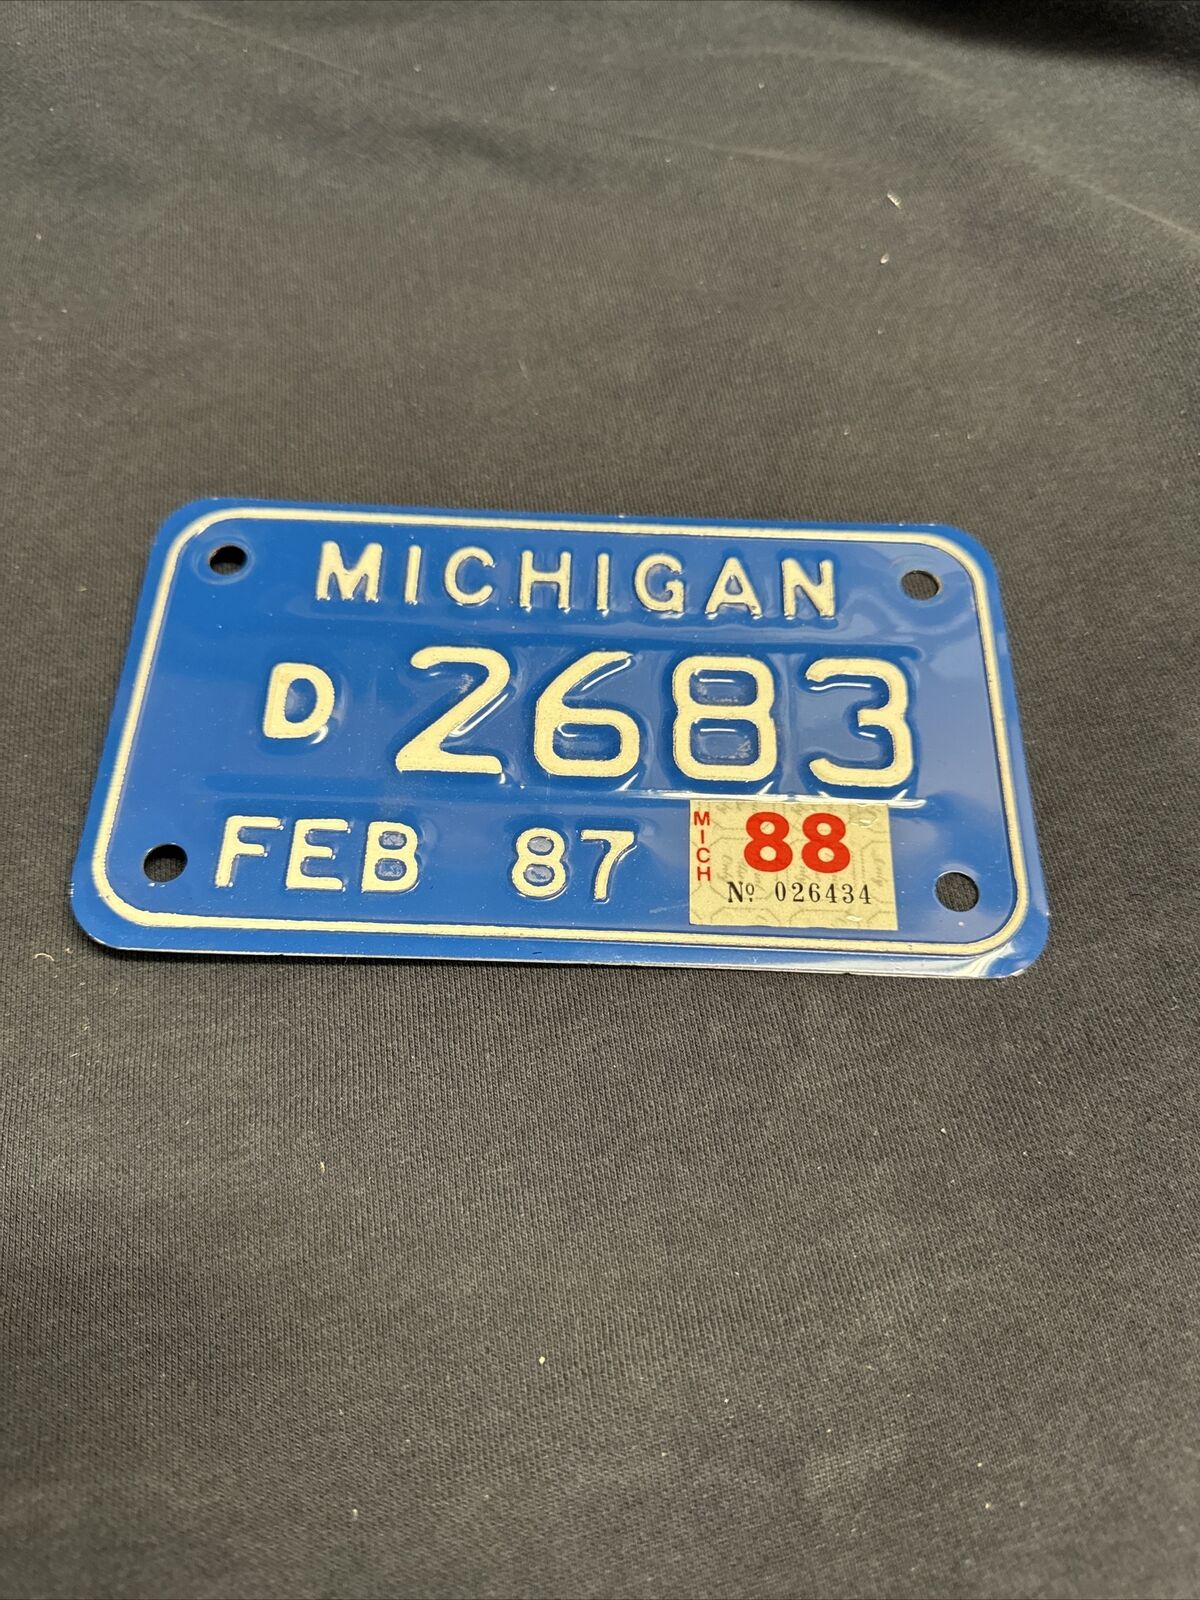 1987 1988 Michigan Motorcycle Dealer License Plate D2683